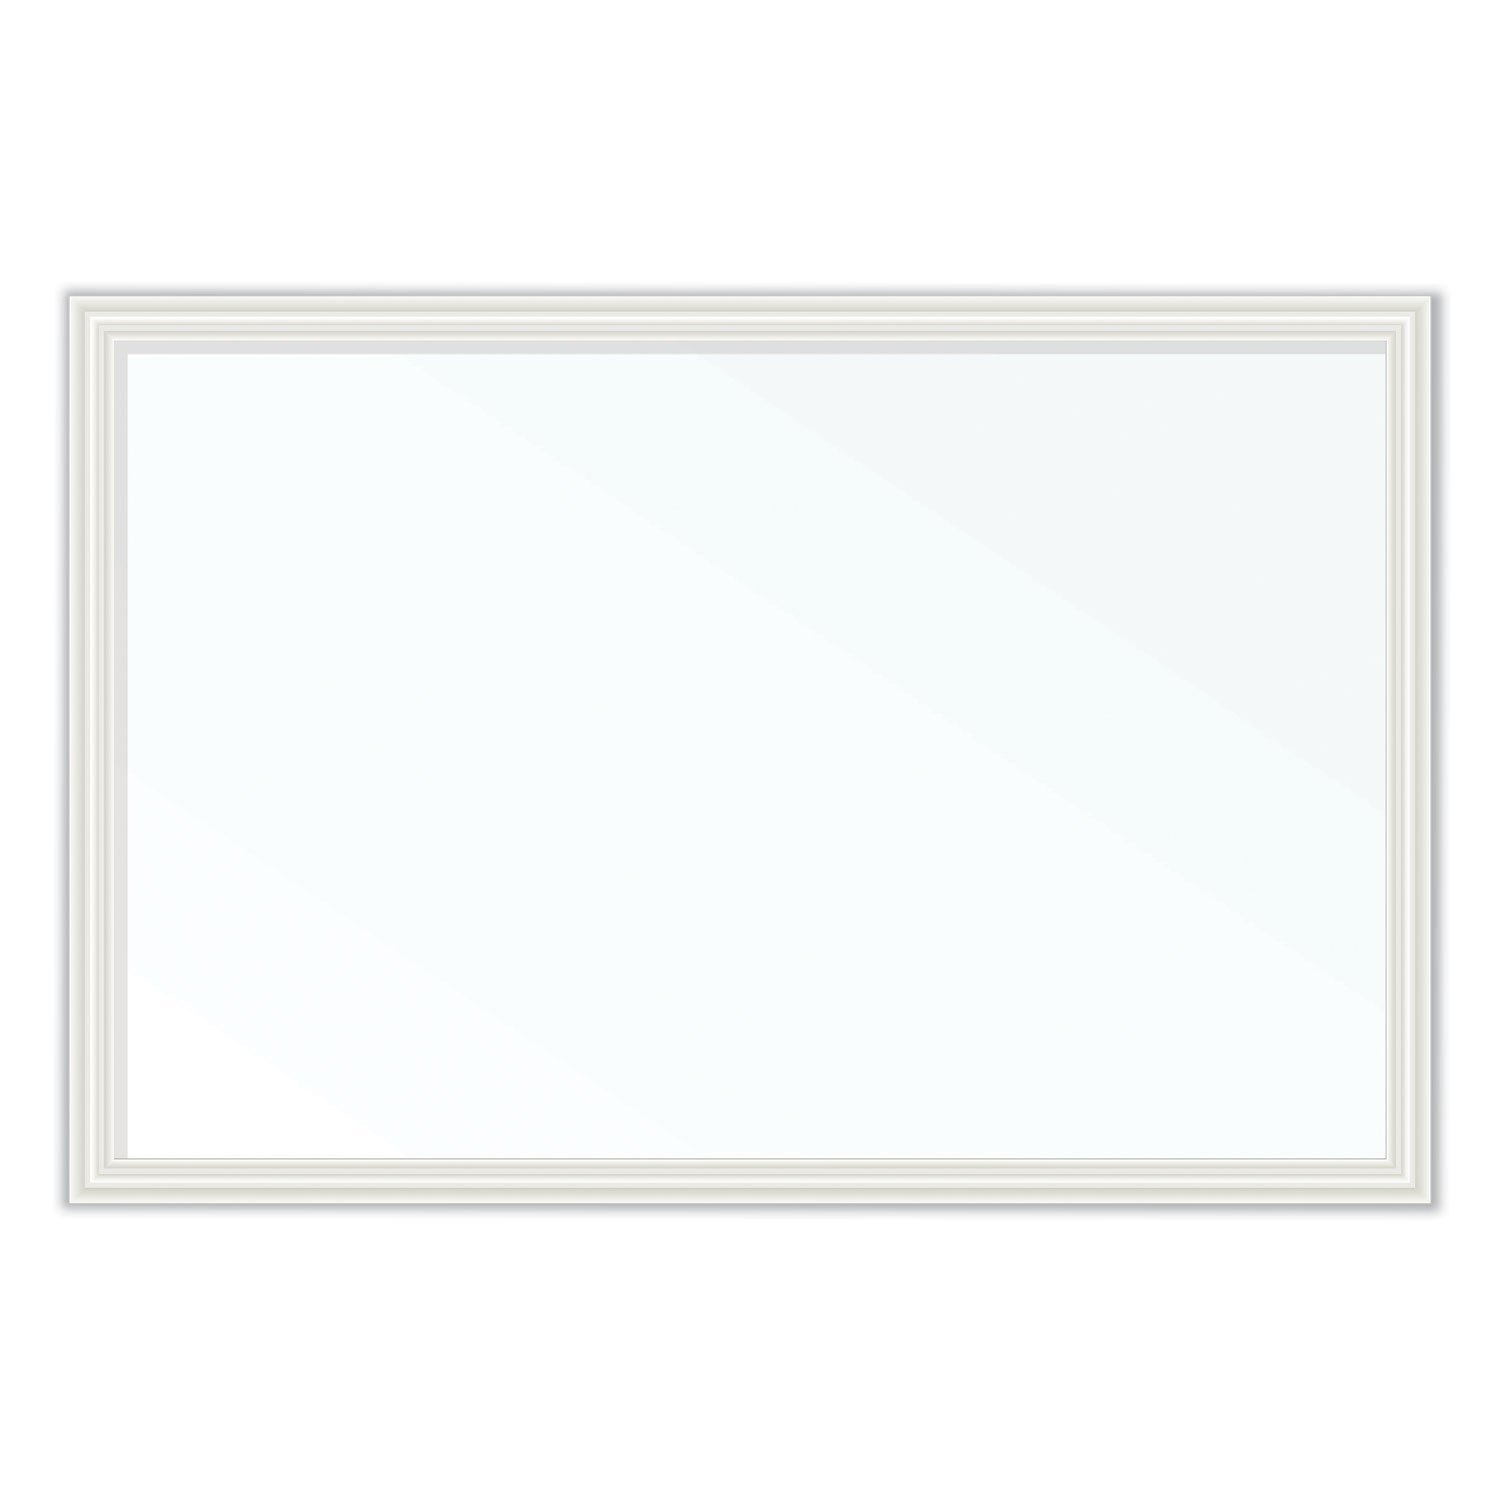 magnetic-dry-erase-board-with-decor-frame-30-x-20-white-surface-white-wood-frame_ubr2071u0001 - 1